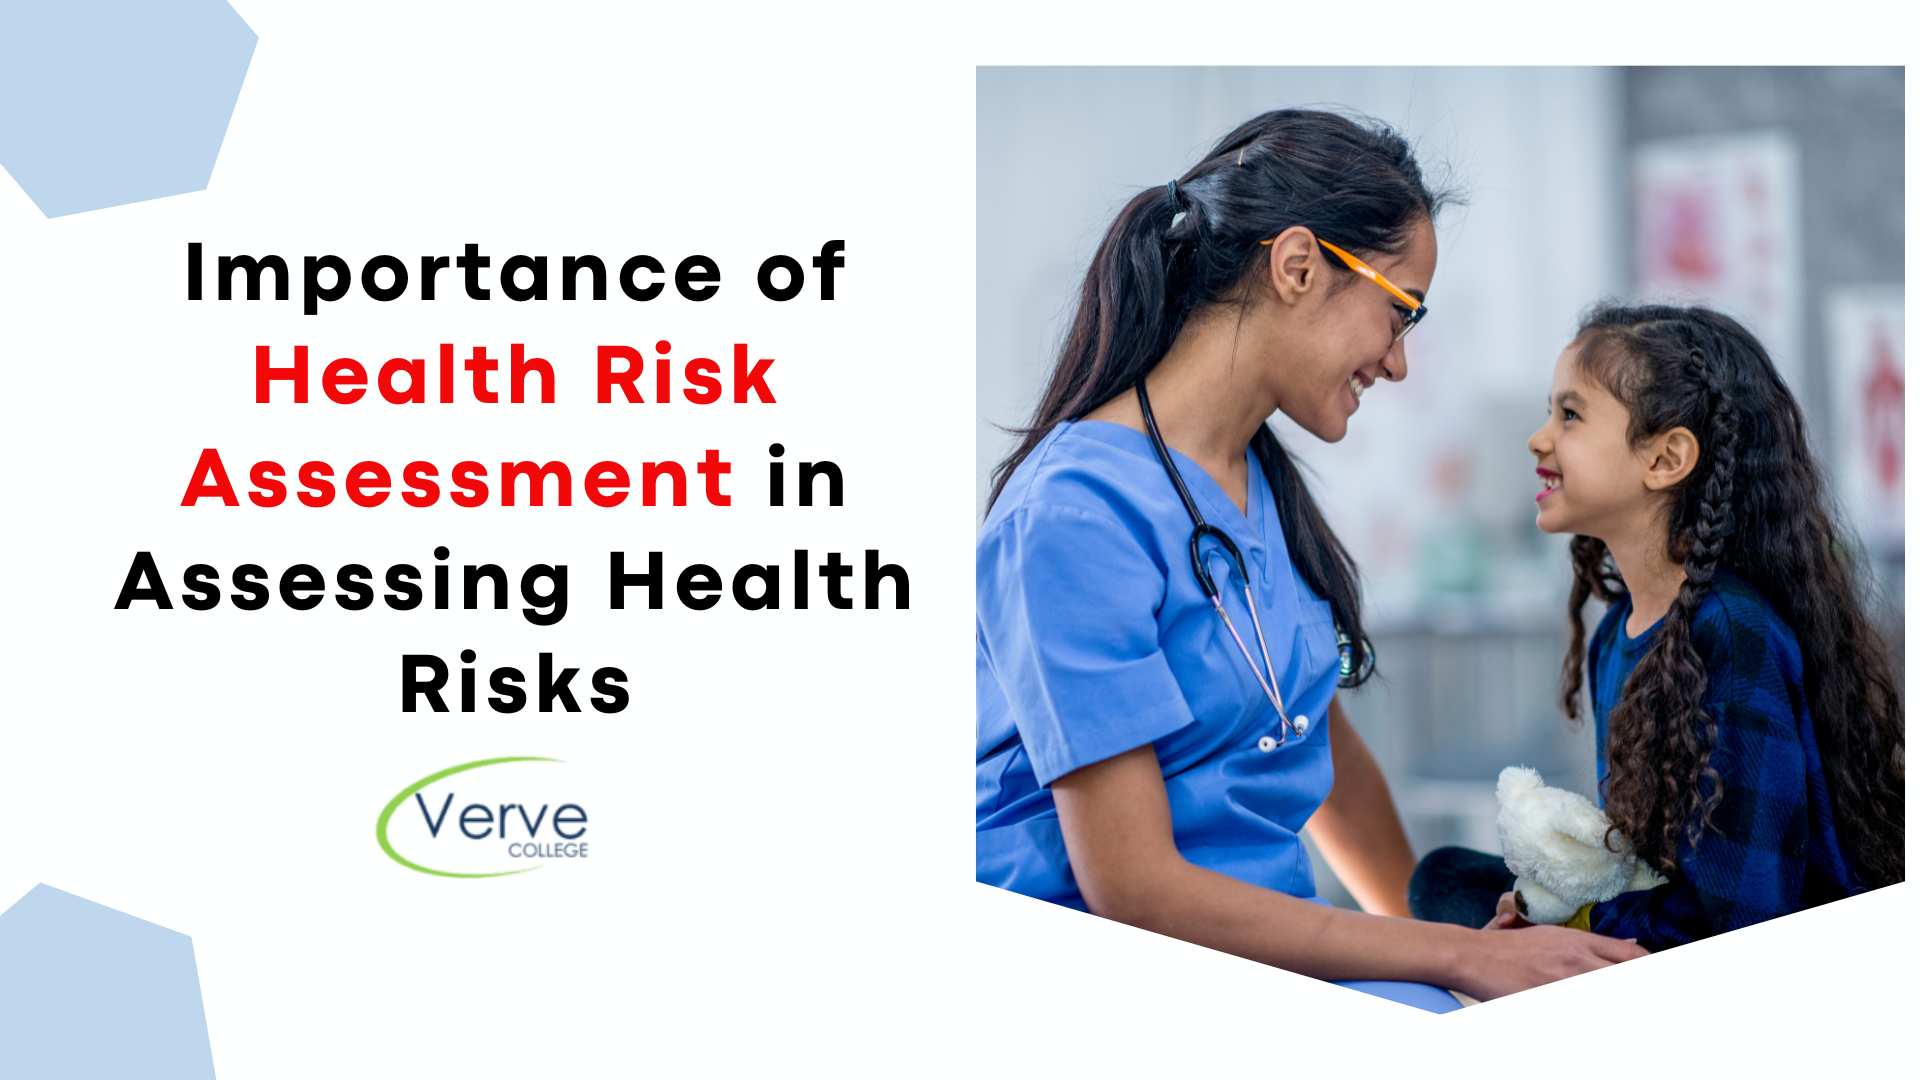 Health Risk Assessment: The Importance of Assessing Health Risks